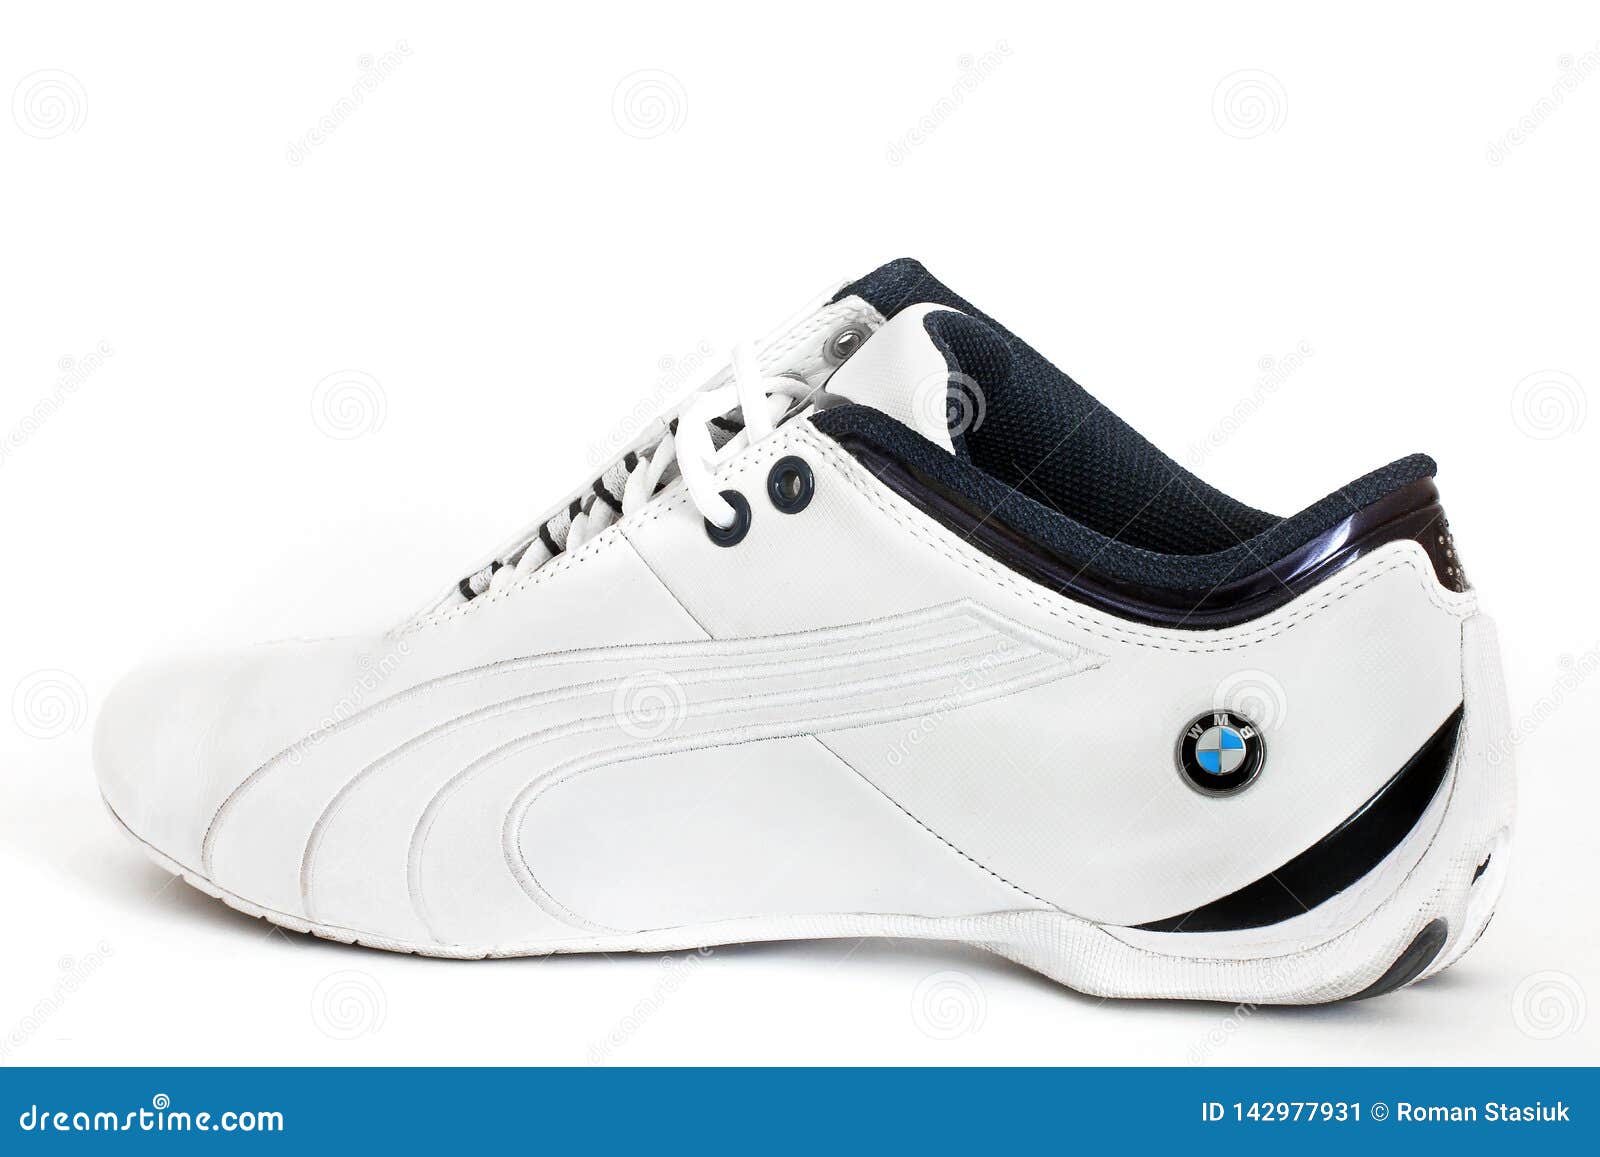 puma motorsport shoes bmw